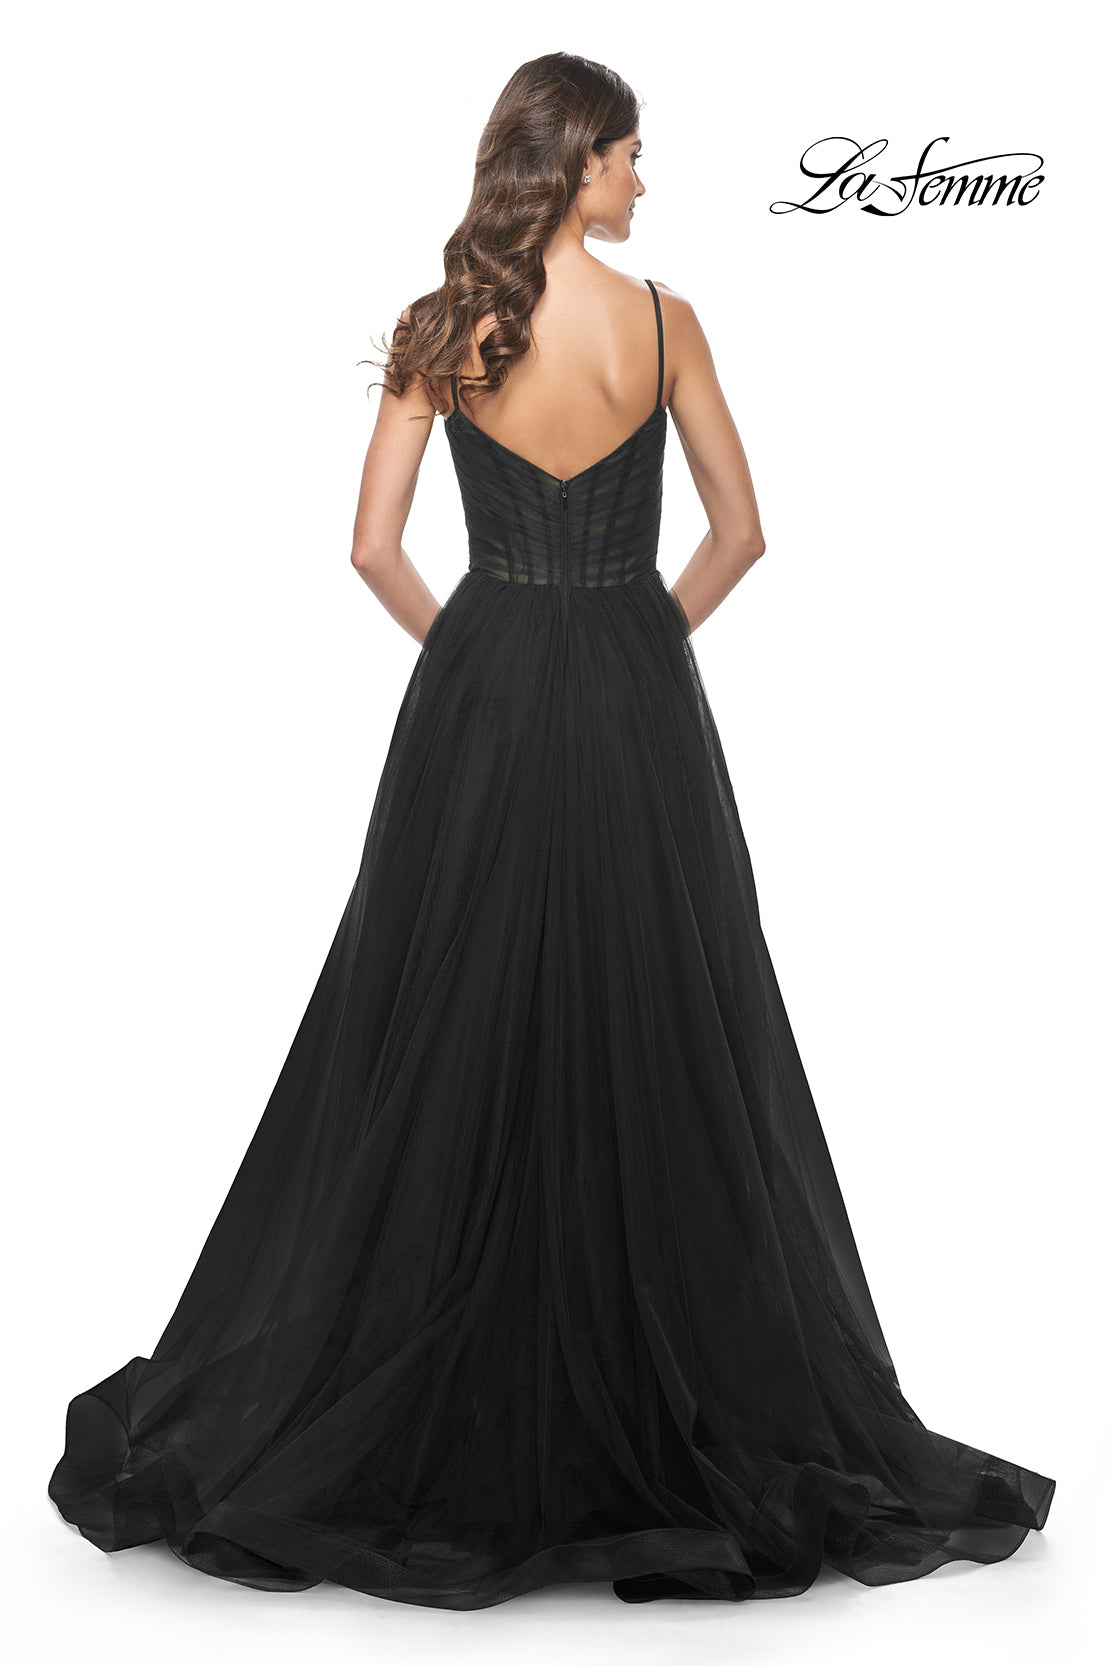 La-Femme-32130-V-Neck-Neckline-Zipper-Back-Pleating-Tulle-A-Line-Black-Evening-Dress-B-Chic-Fashions-Prom-Dress